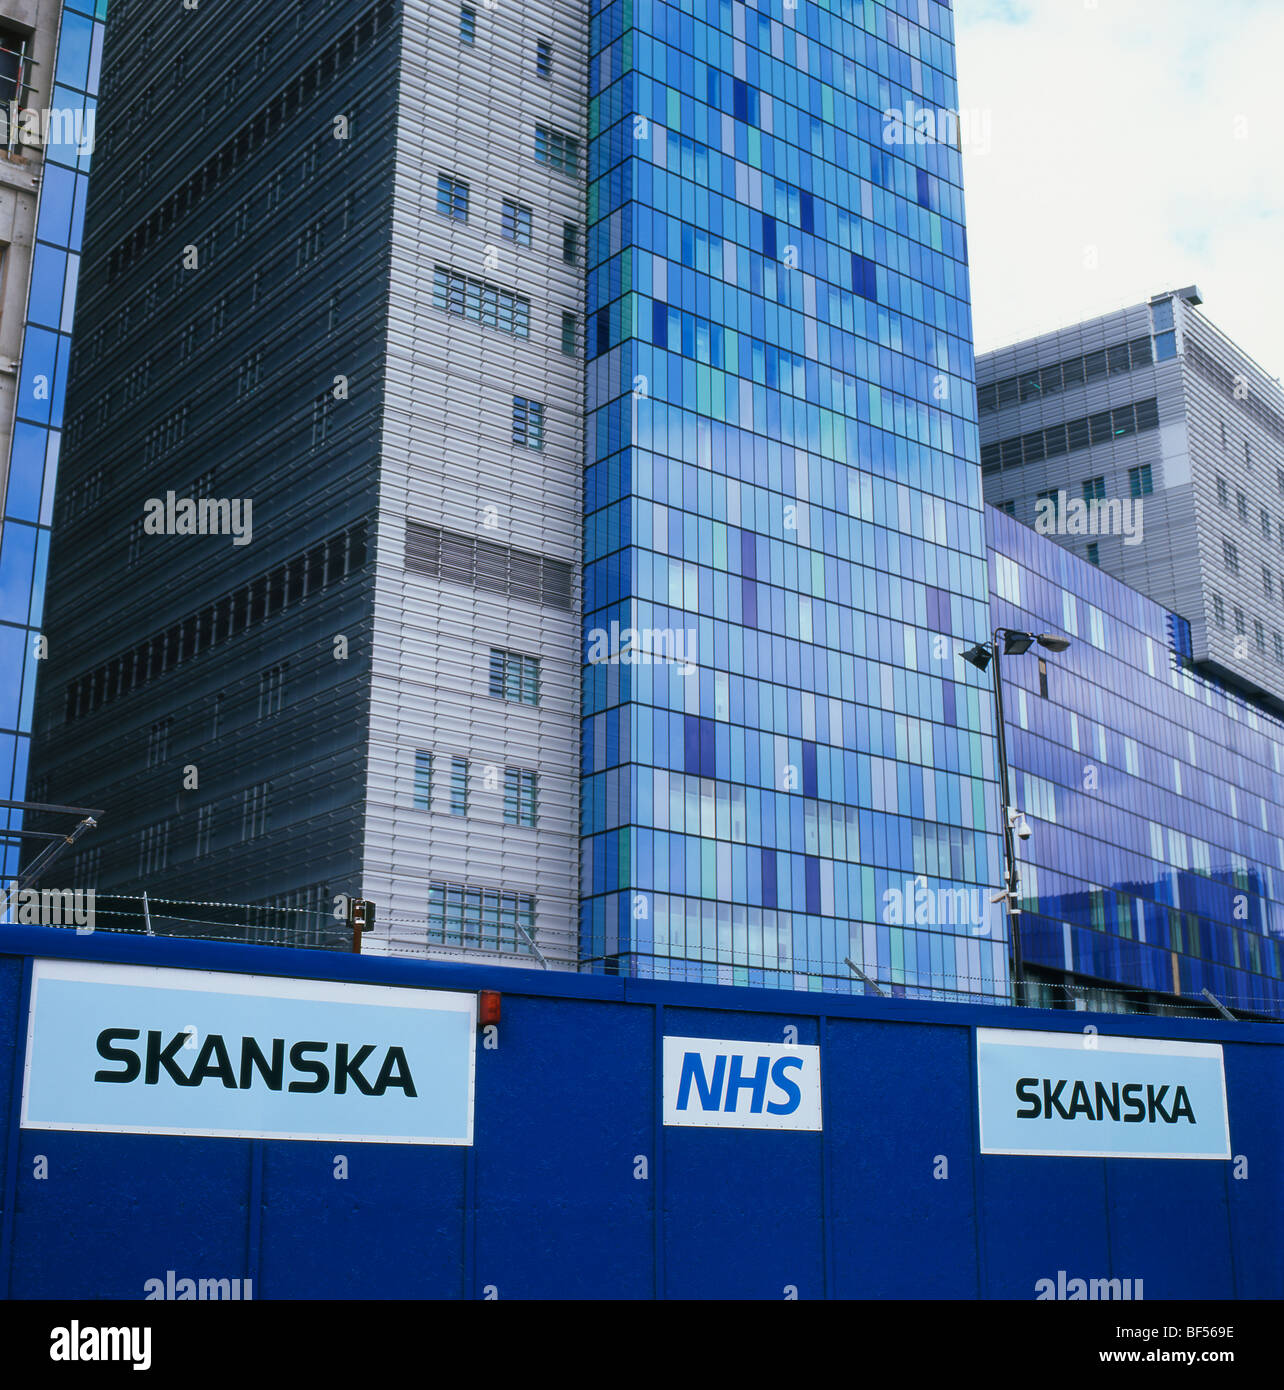 New buildings, Skanska and NHS signs exterior view of the Royal London Hospital in Whitechapel East London, UK   KATHY DEWITT Stock Photo